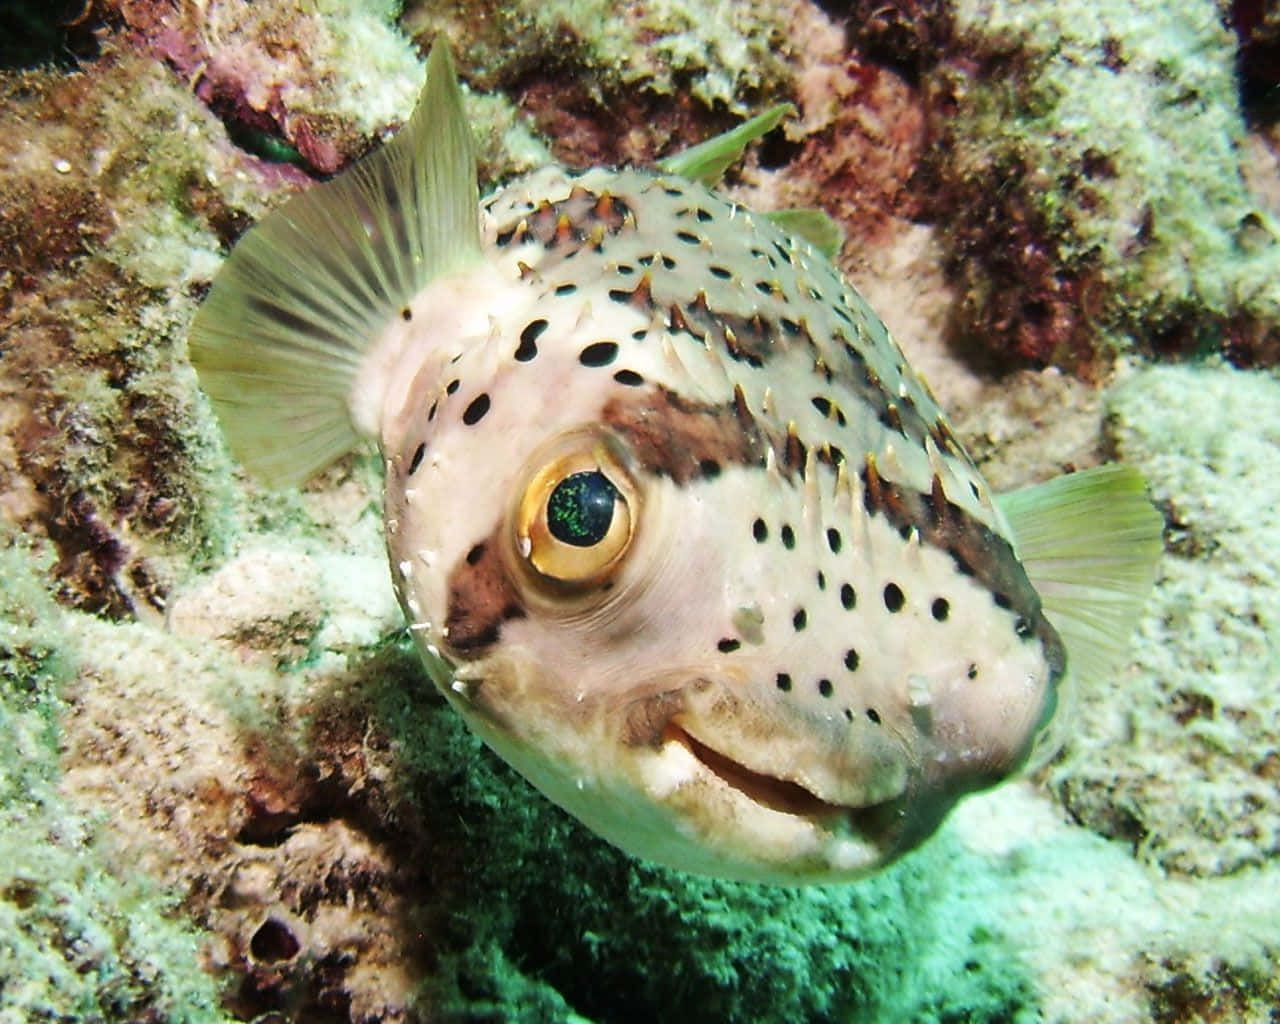 A Beautiful Pufferfish In The Ocean Depths